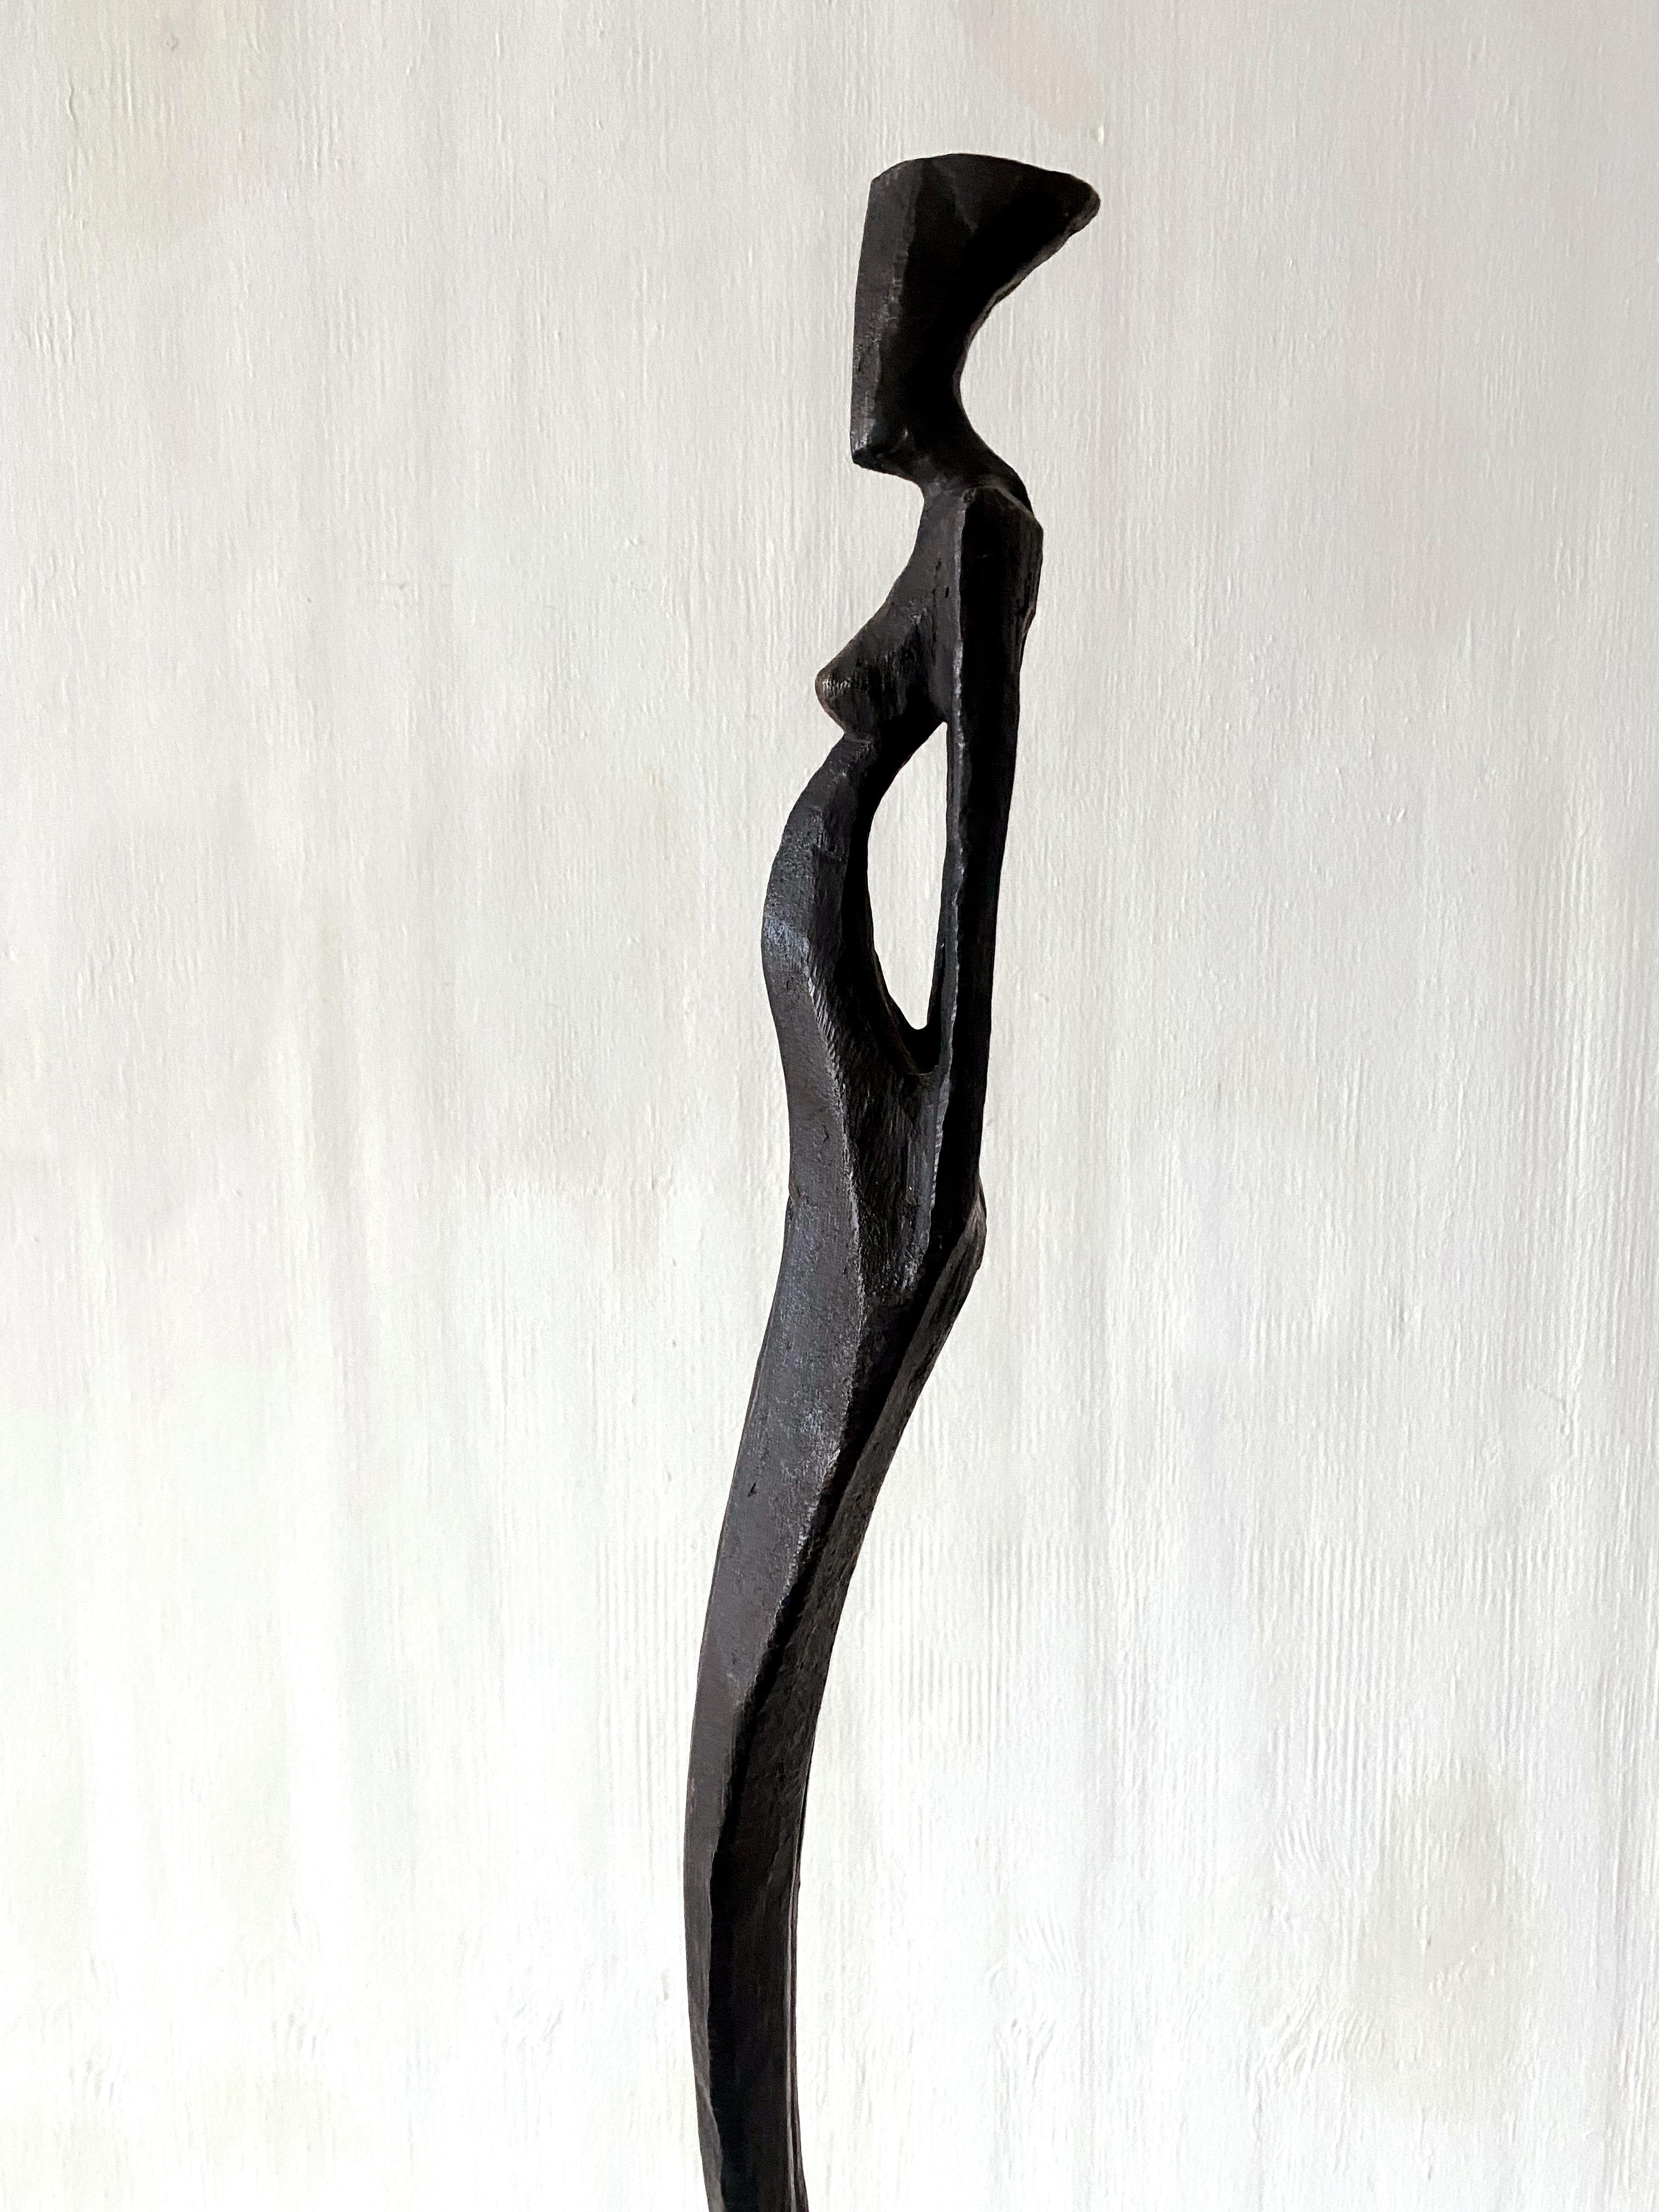 Kathy by Nando Kallweit. Tall, elegant bronze sculpture of human figure. 4